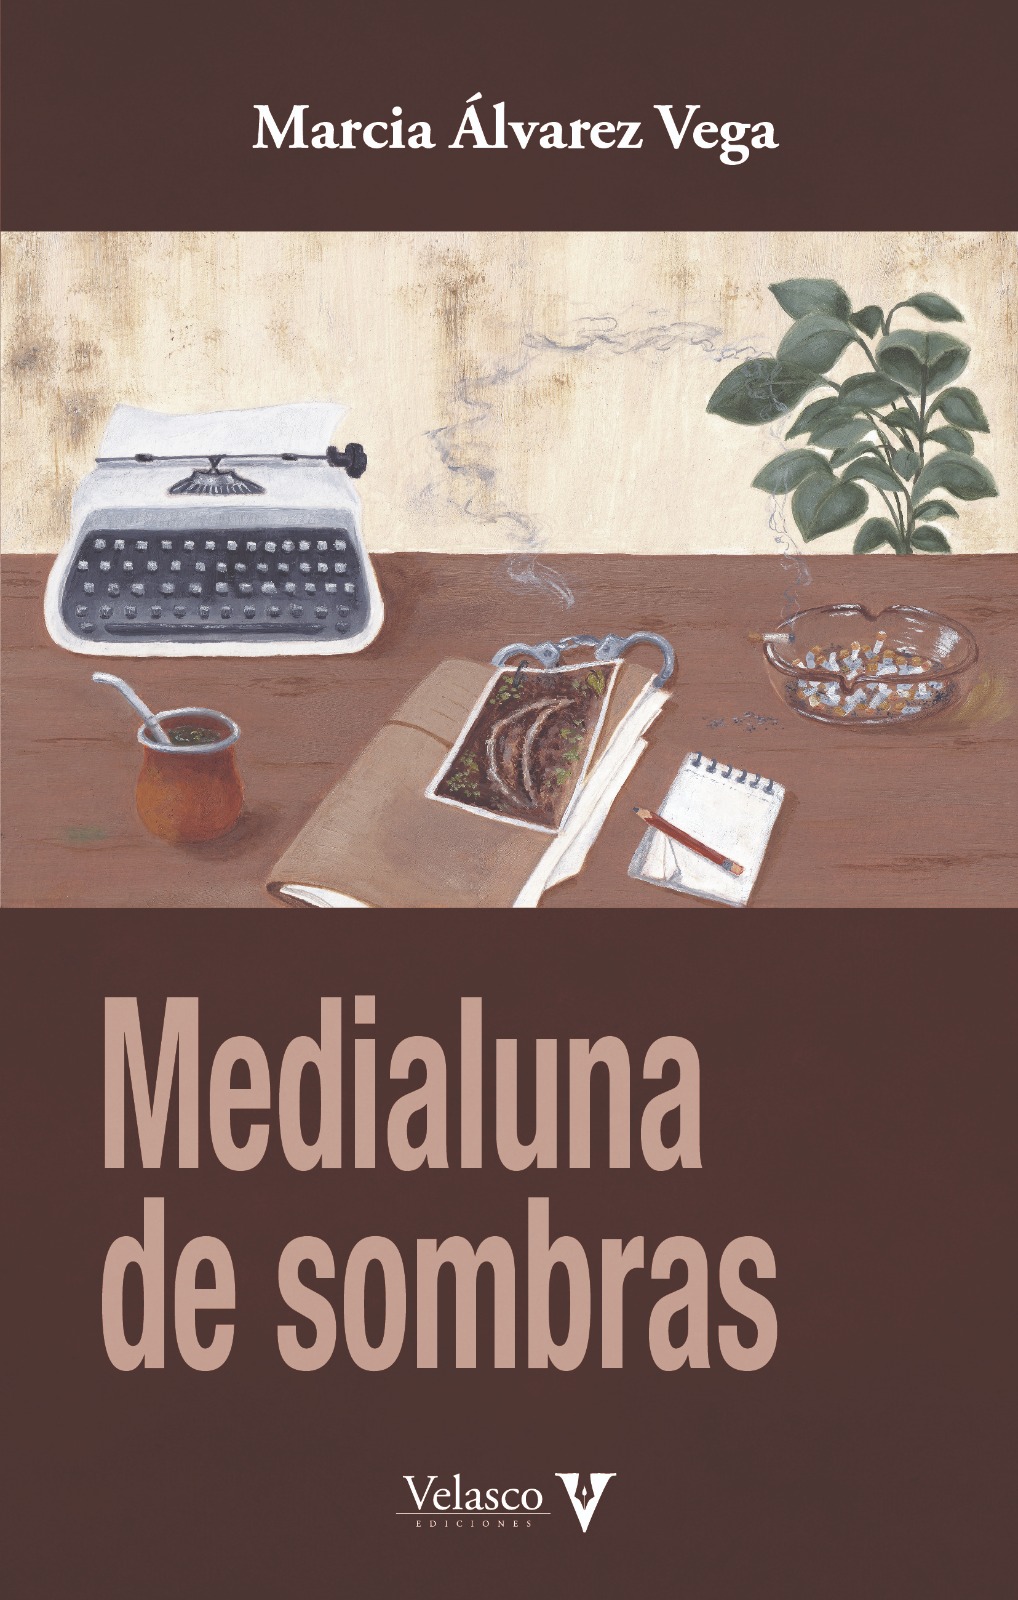 La chilena Marcia Álvarez Vega publica en España “Medialuna de sombras”, novela negra ambientada en San Juan (Argentina)